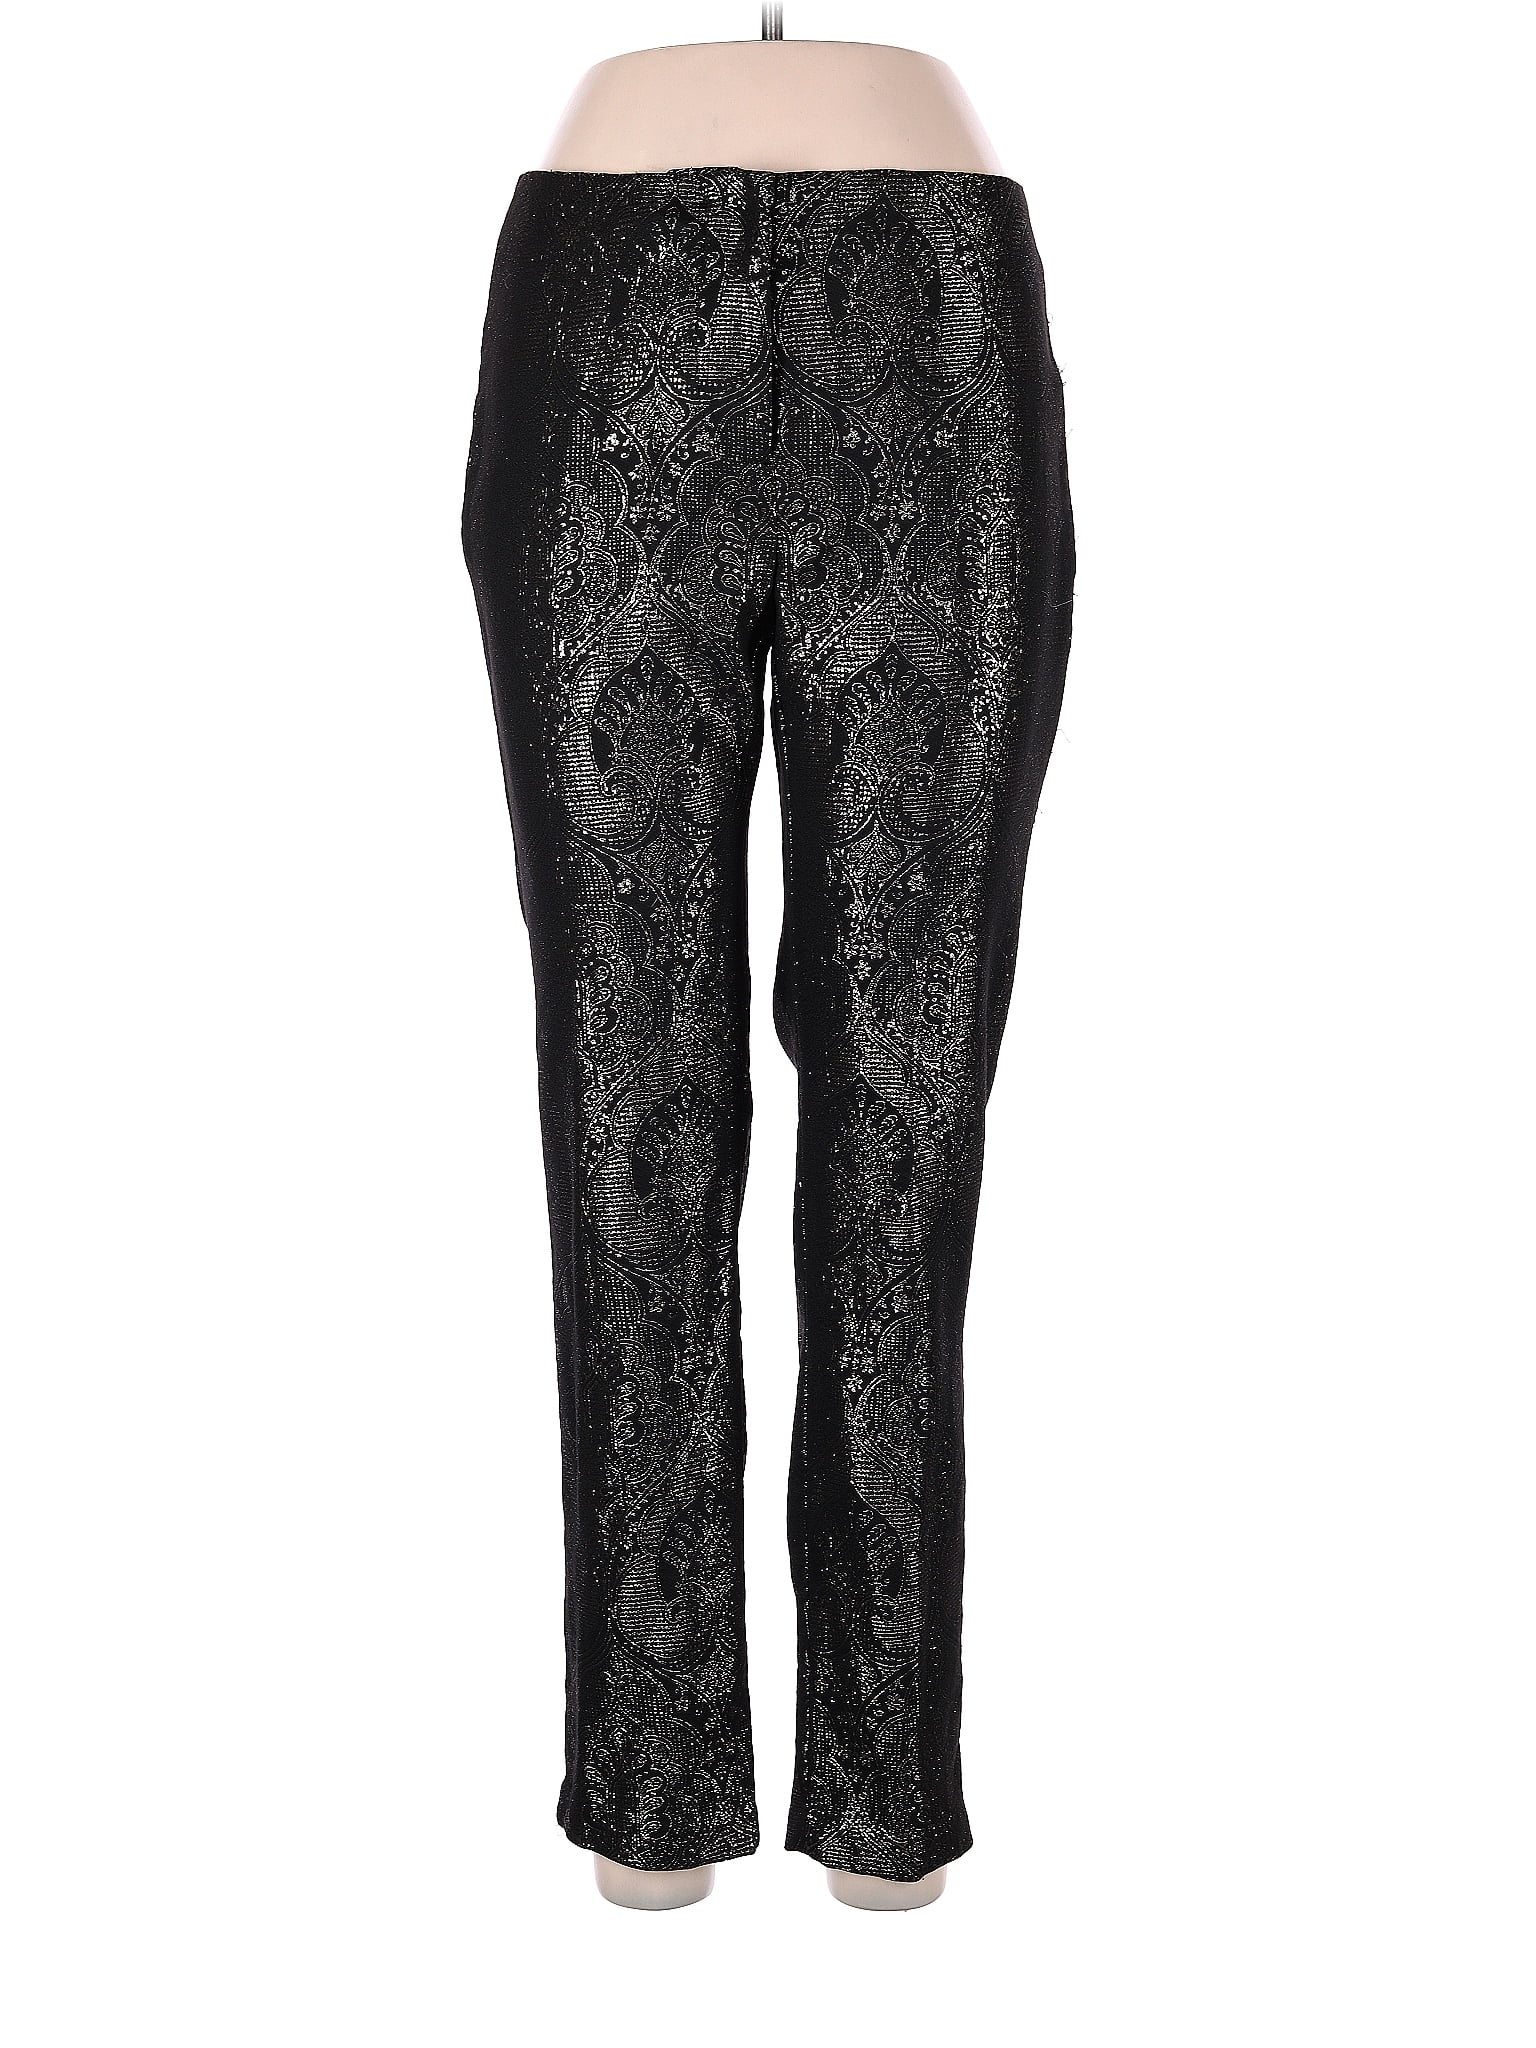 J. McLaughlin Snake Print Black Dress Pants Size 8 - 78% off | thredUP